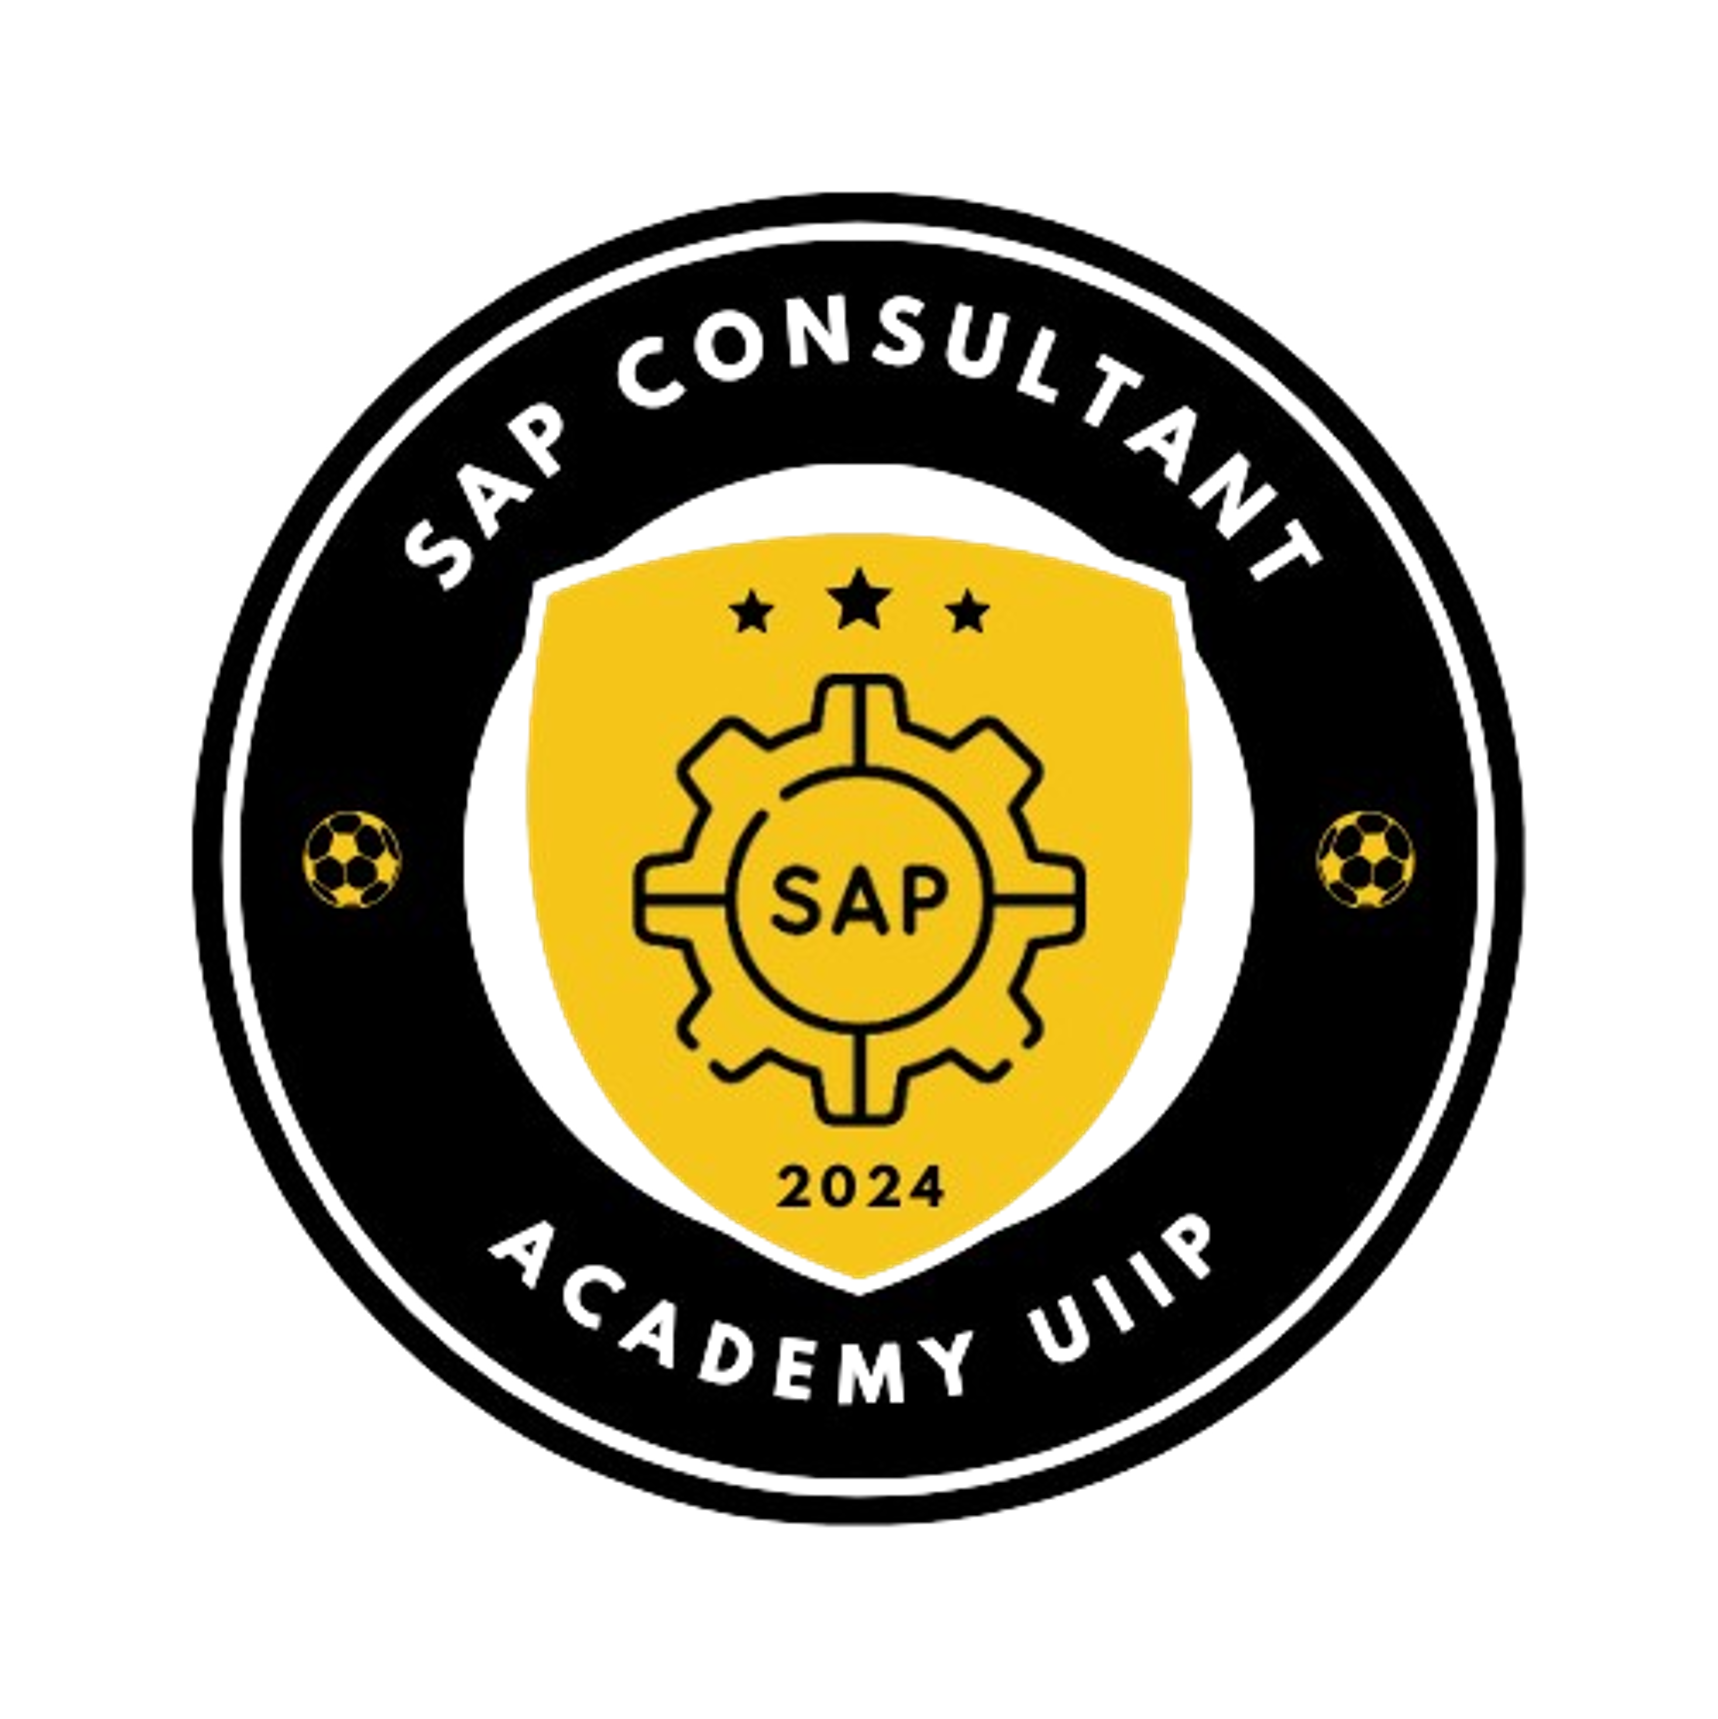 Sap Consultant Academy